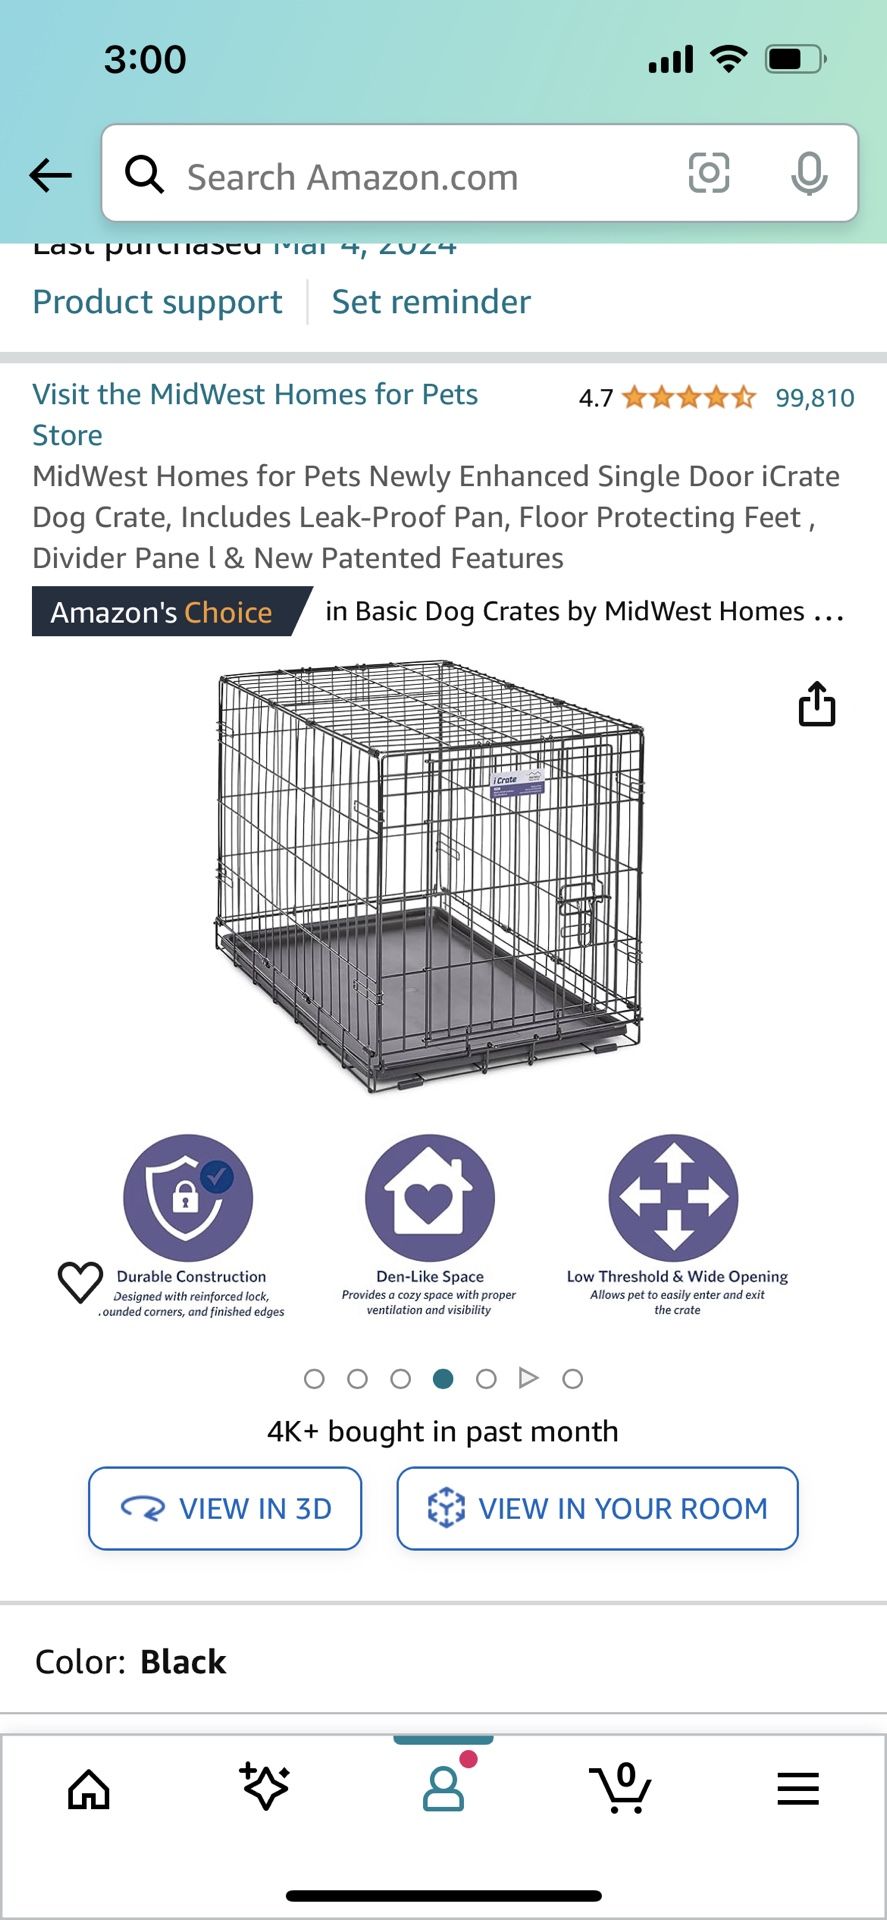 Medium Sized Dog crate 